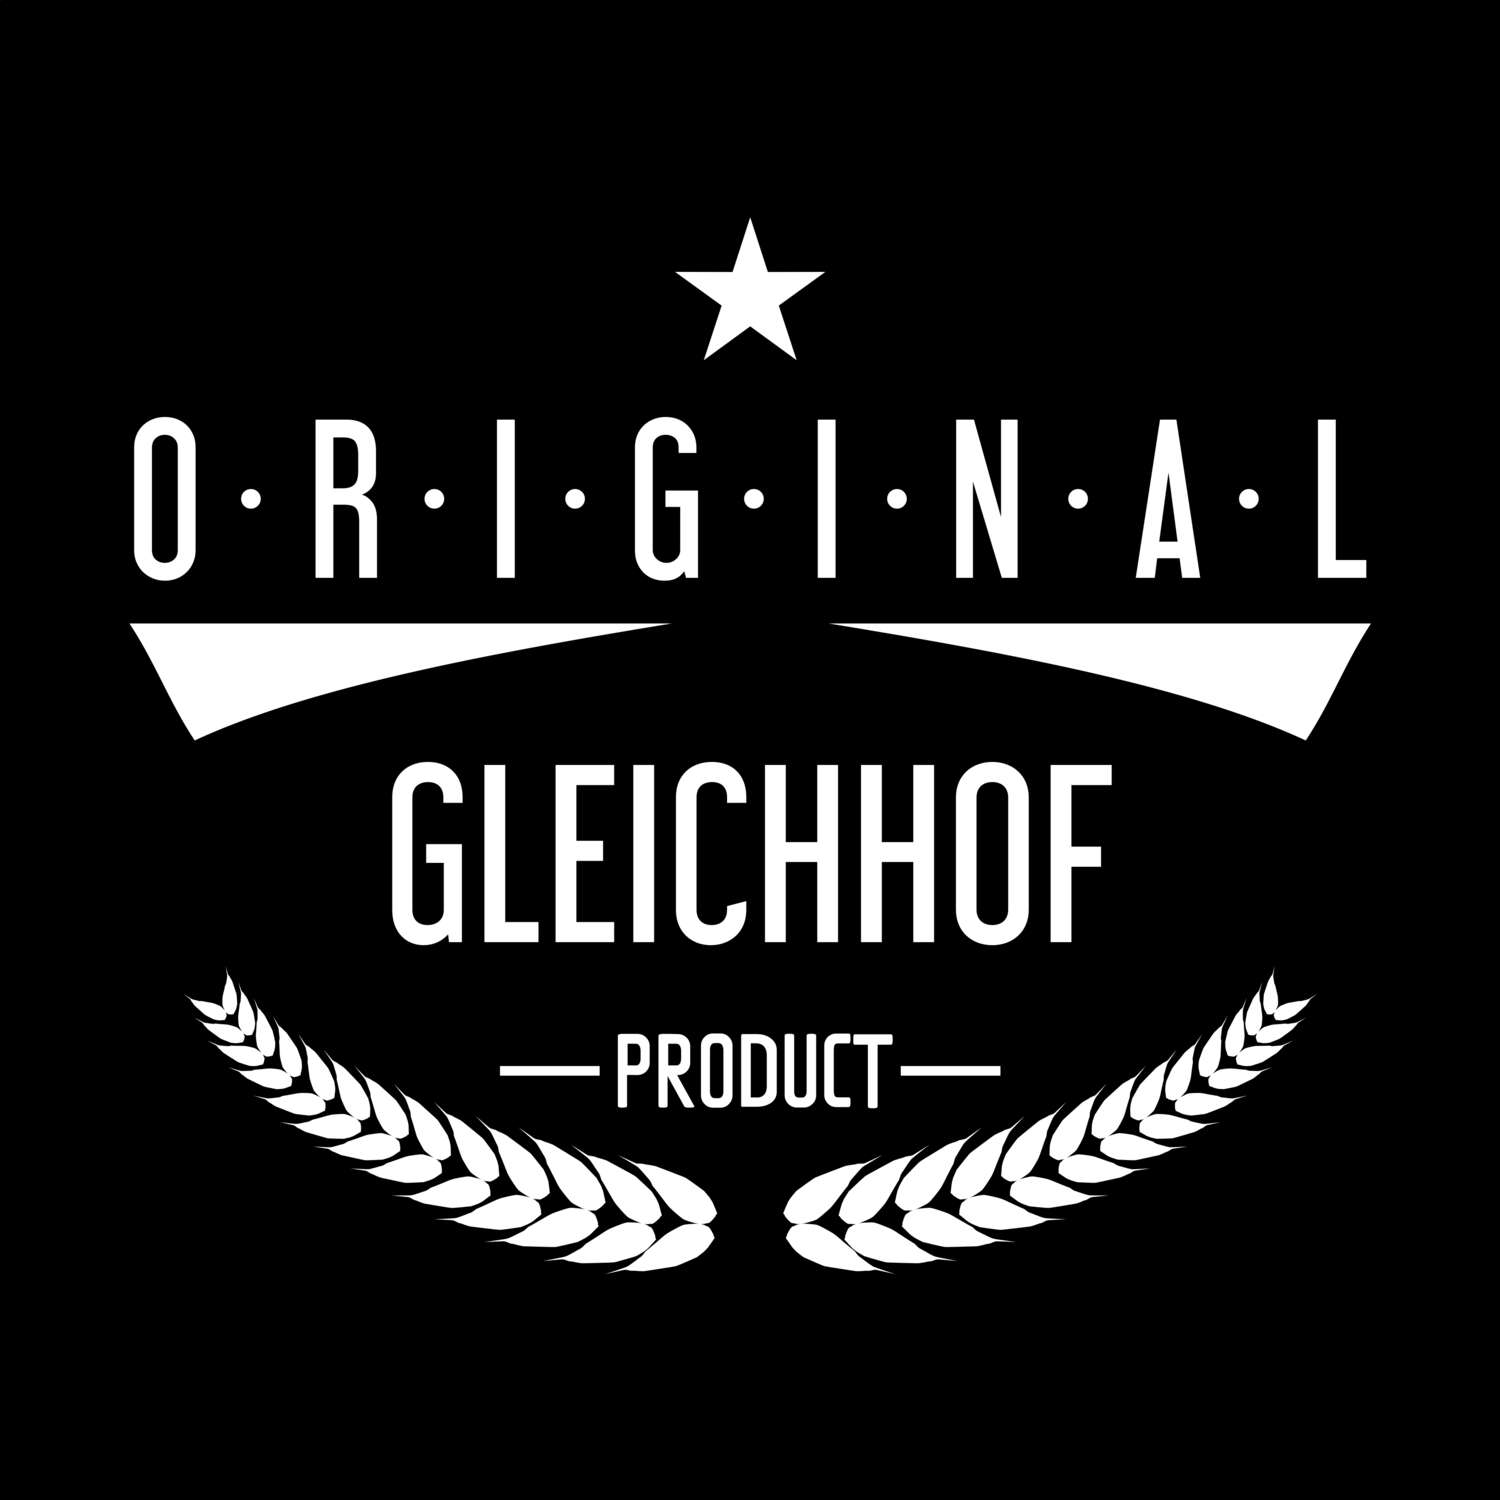 Gleichhof T-Shirt »Original Product«